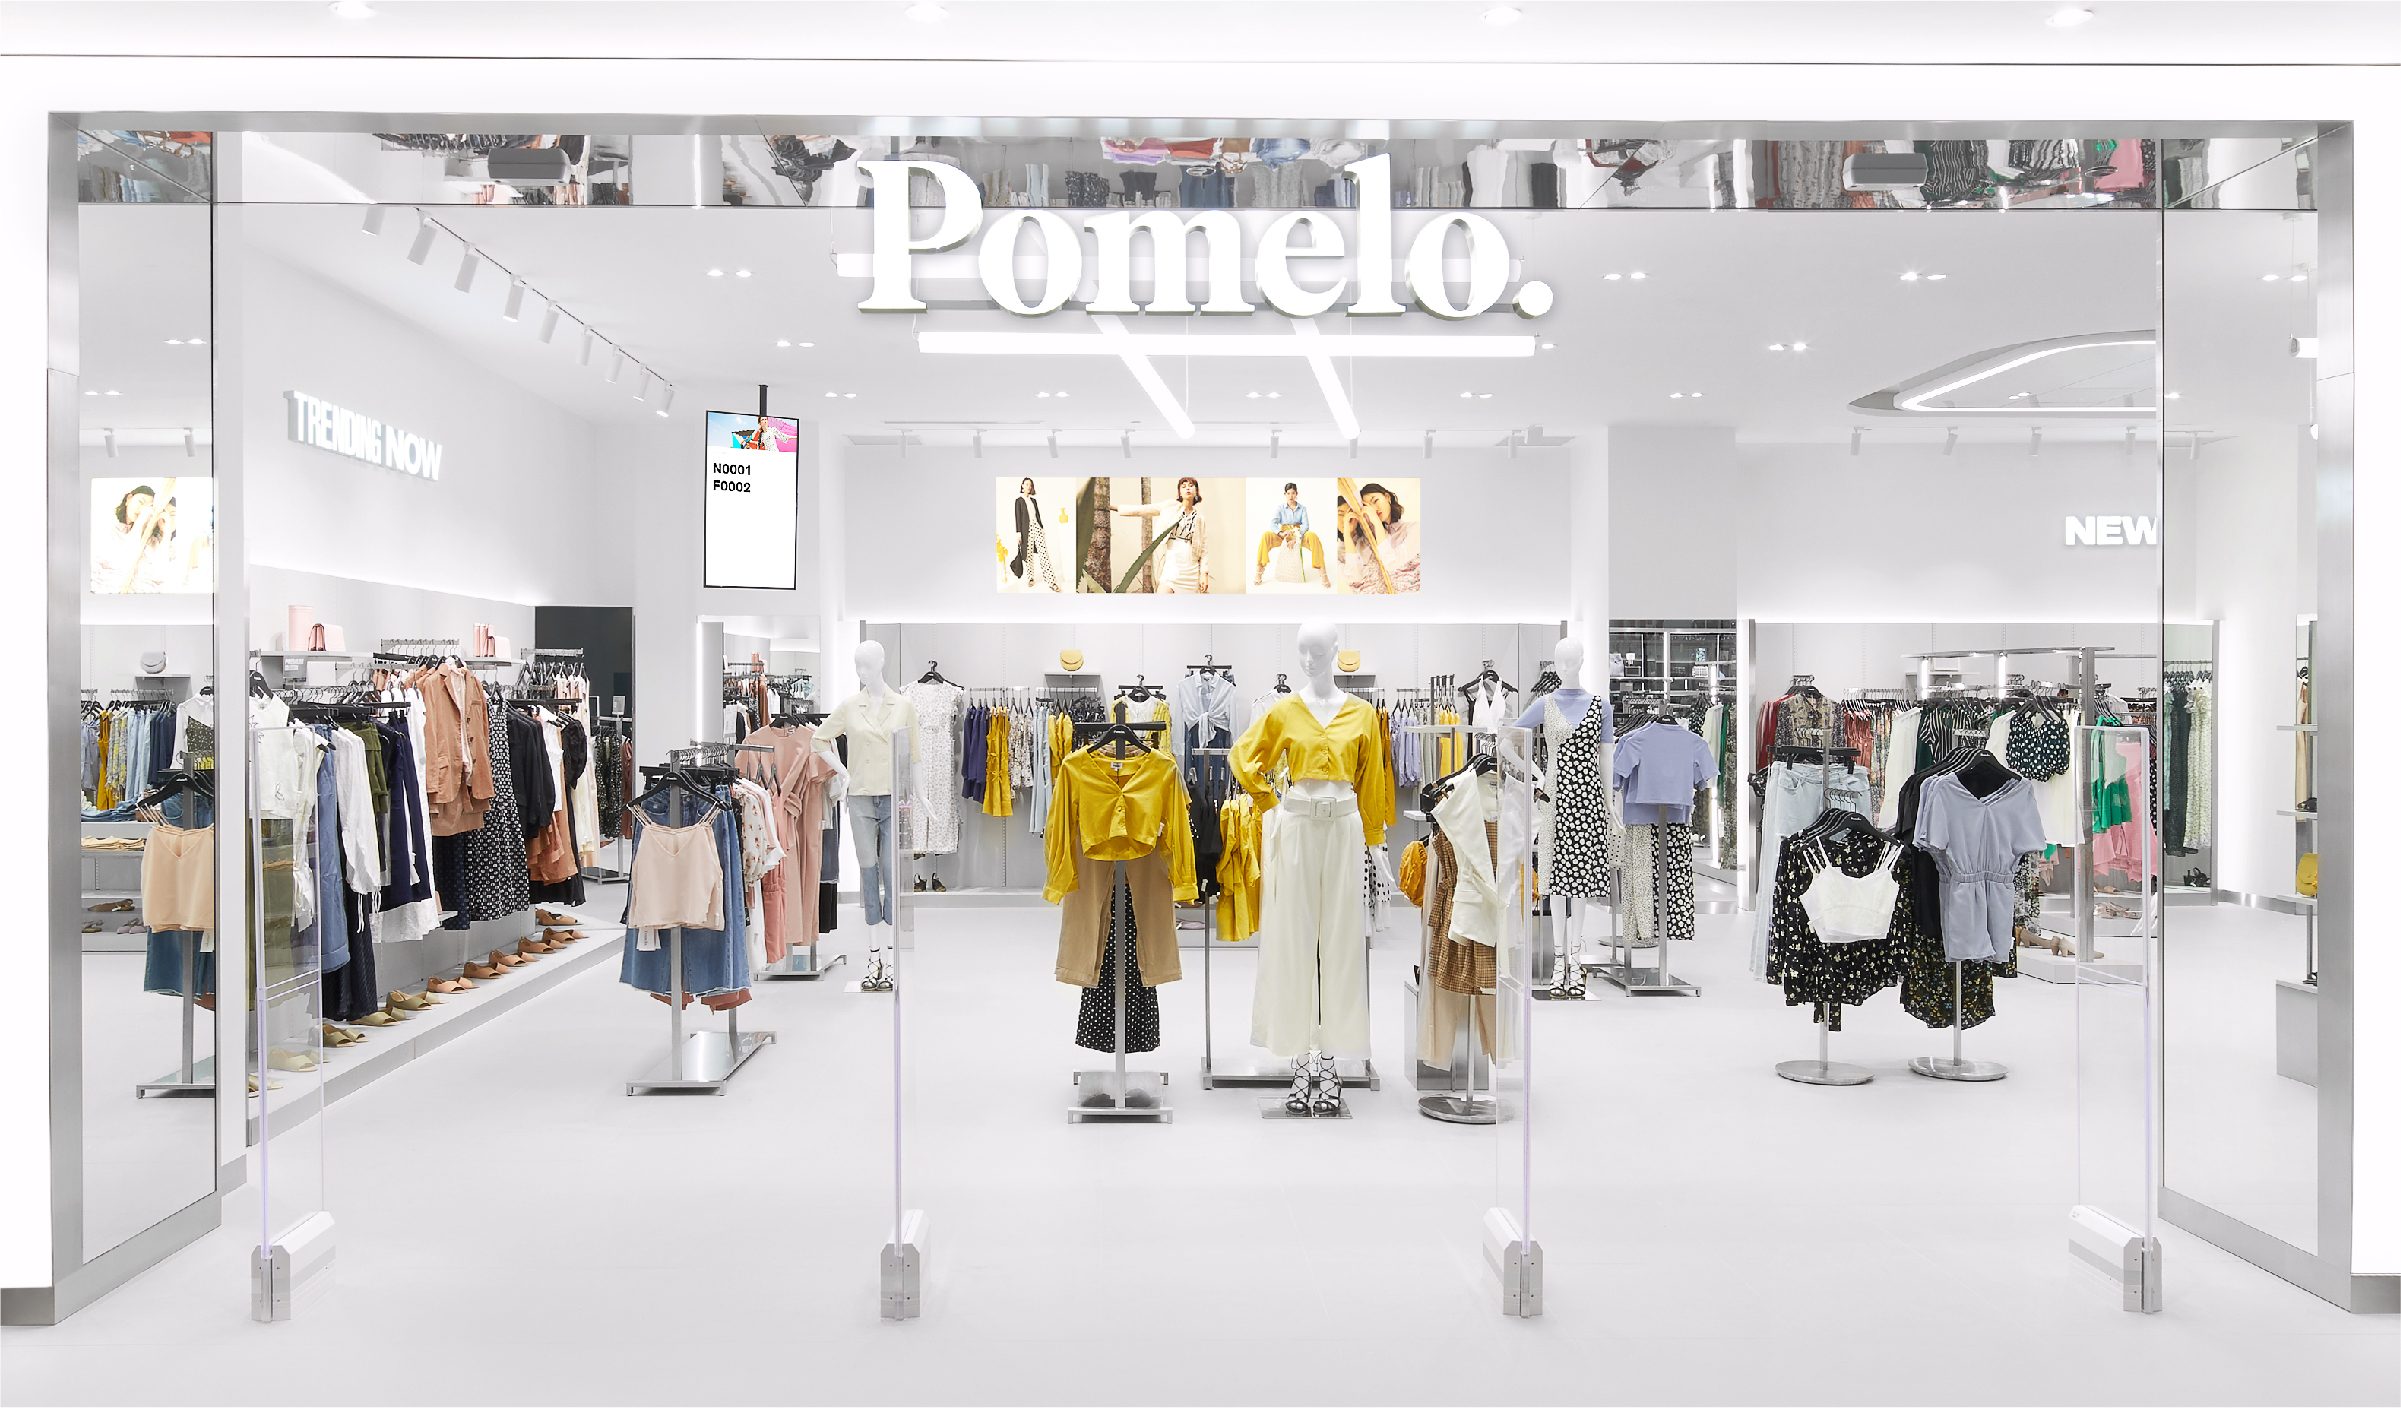 Thai fashion brand Pomelo cut losses, posted higher revenue in 2022